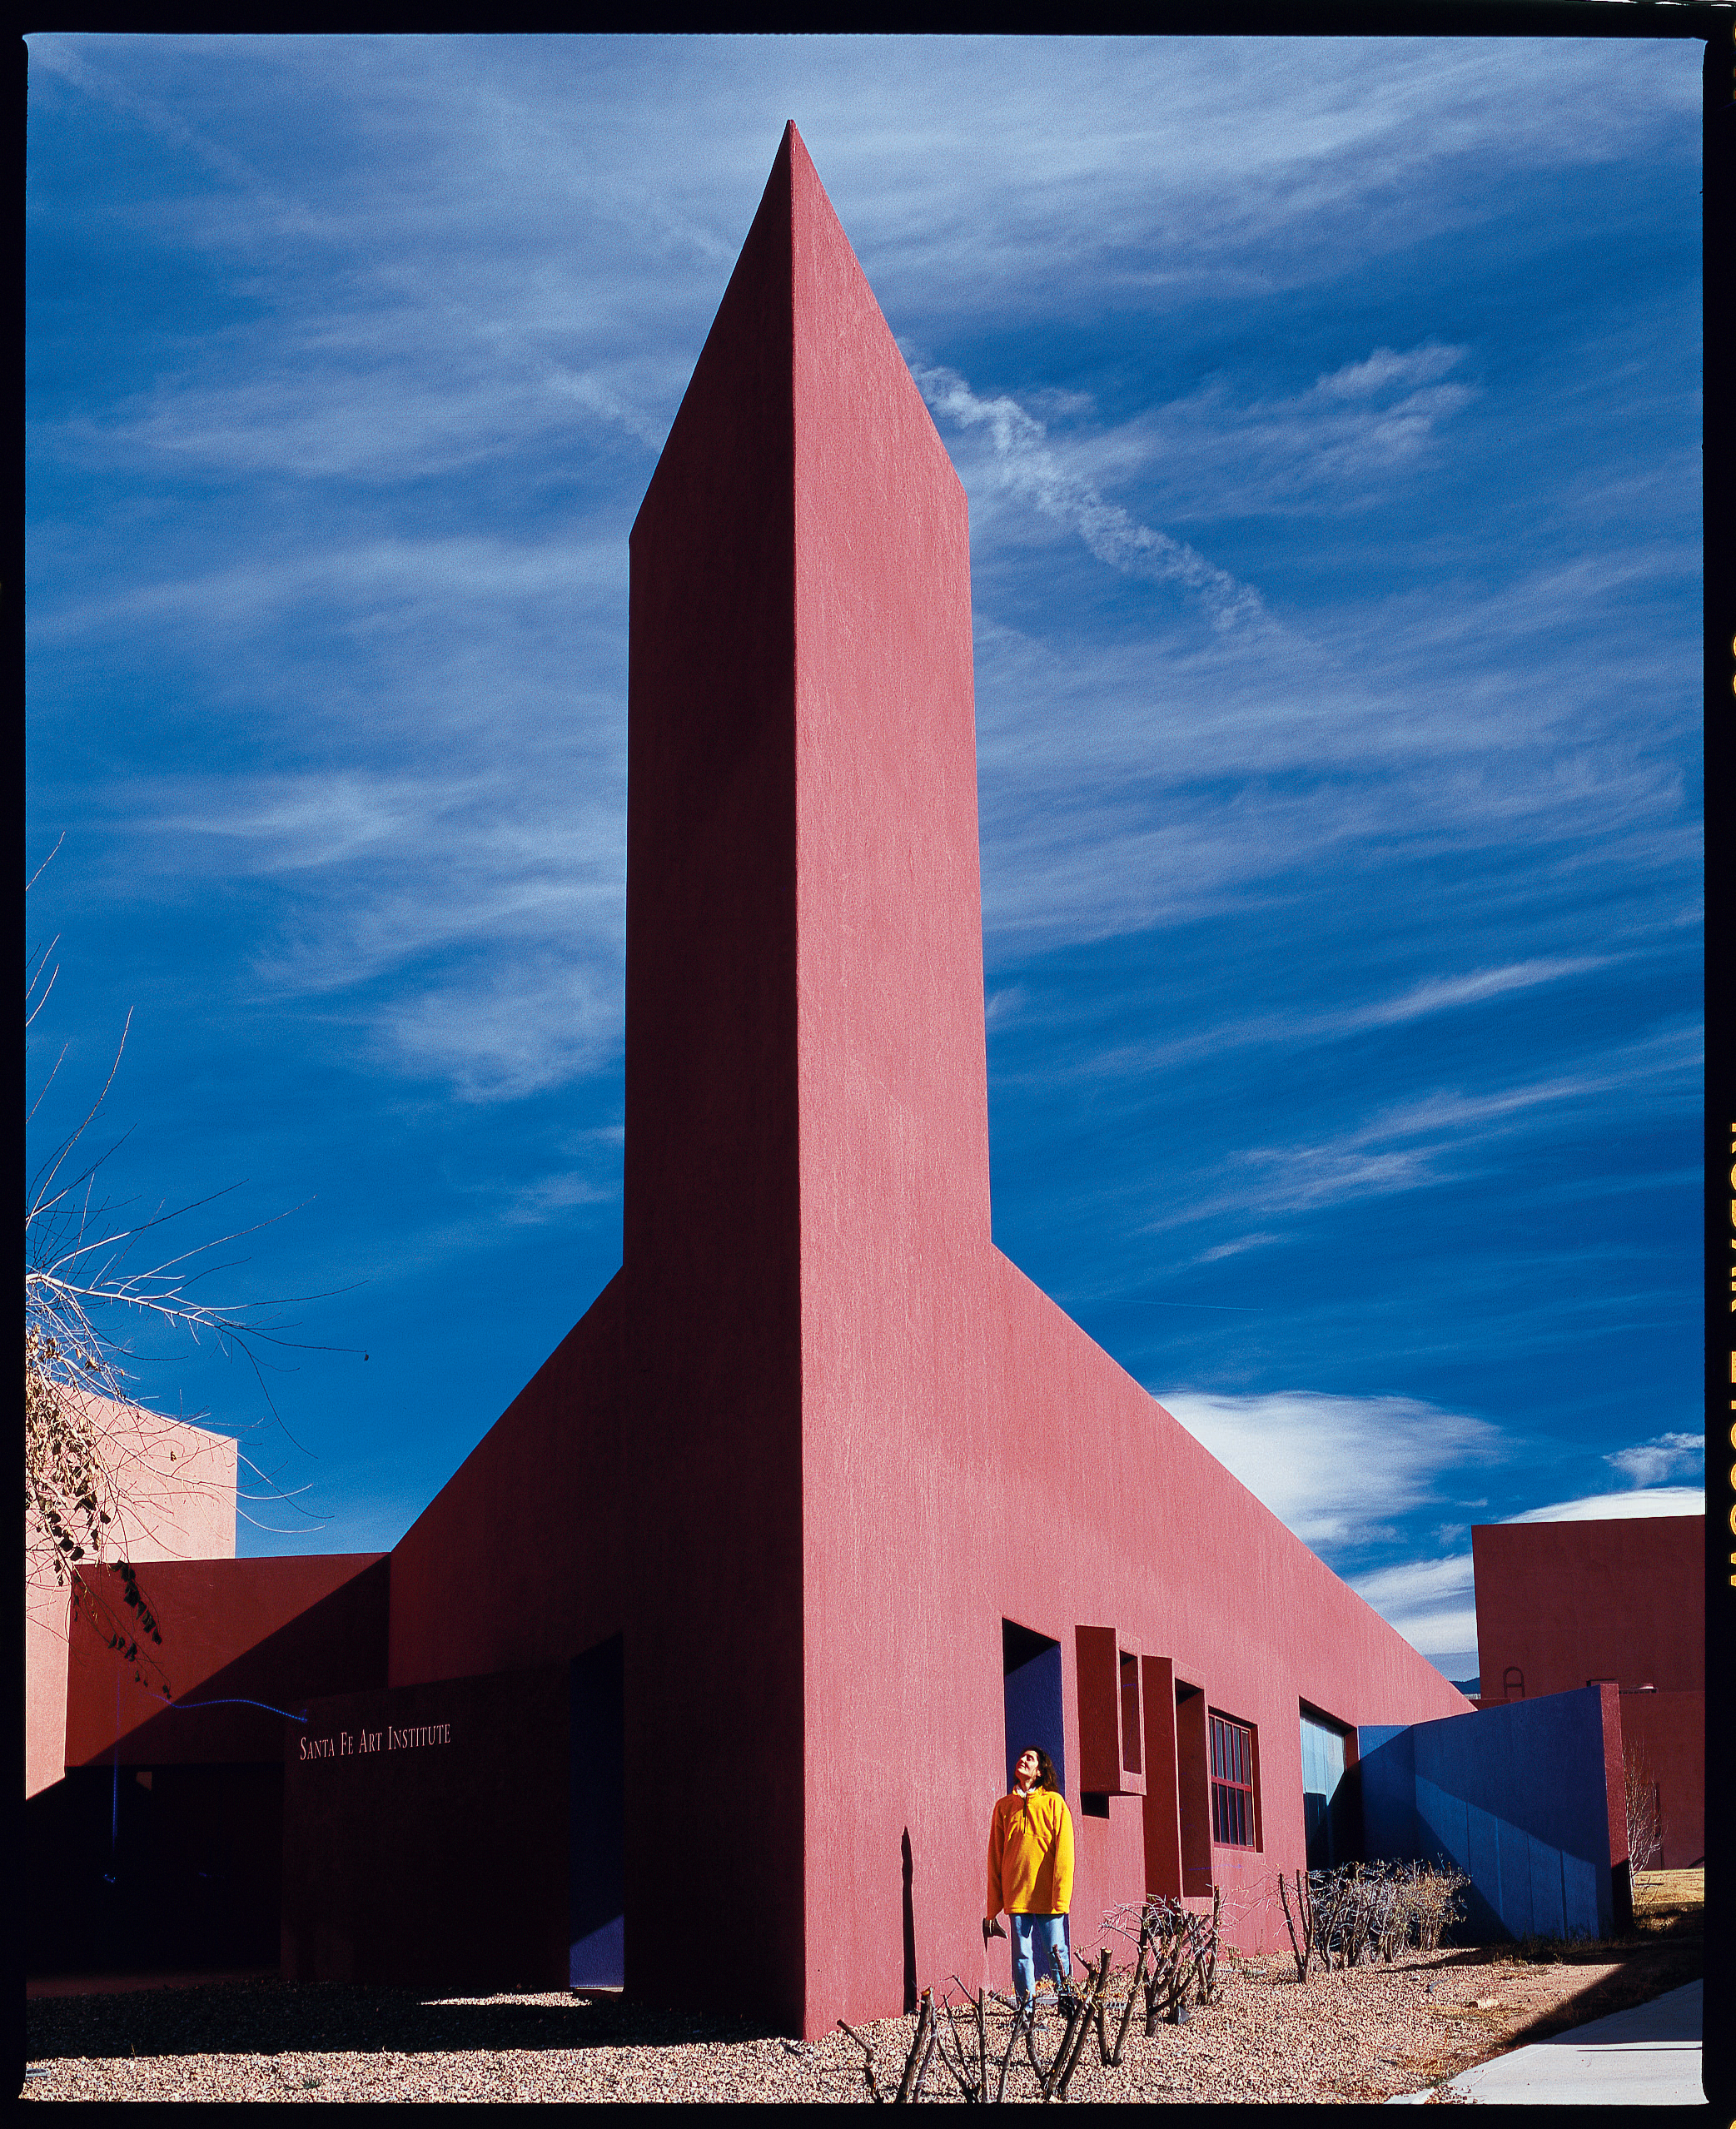 Santa Fe, New Mexico: Best Modern Architecture